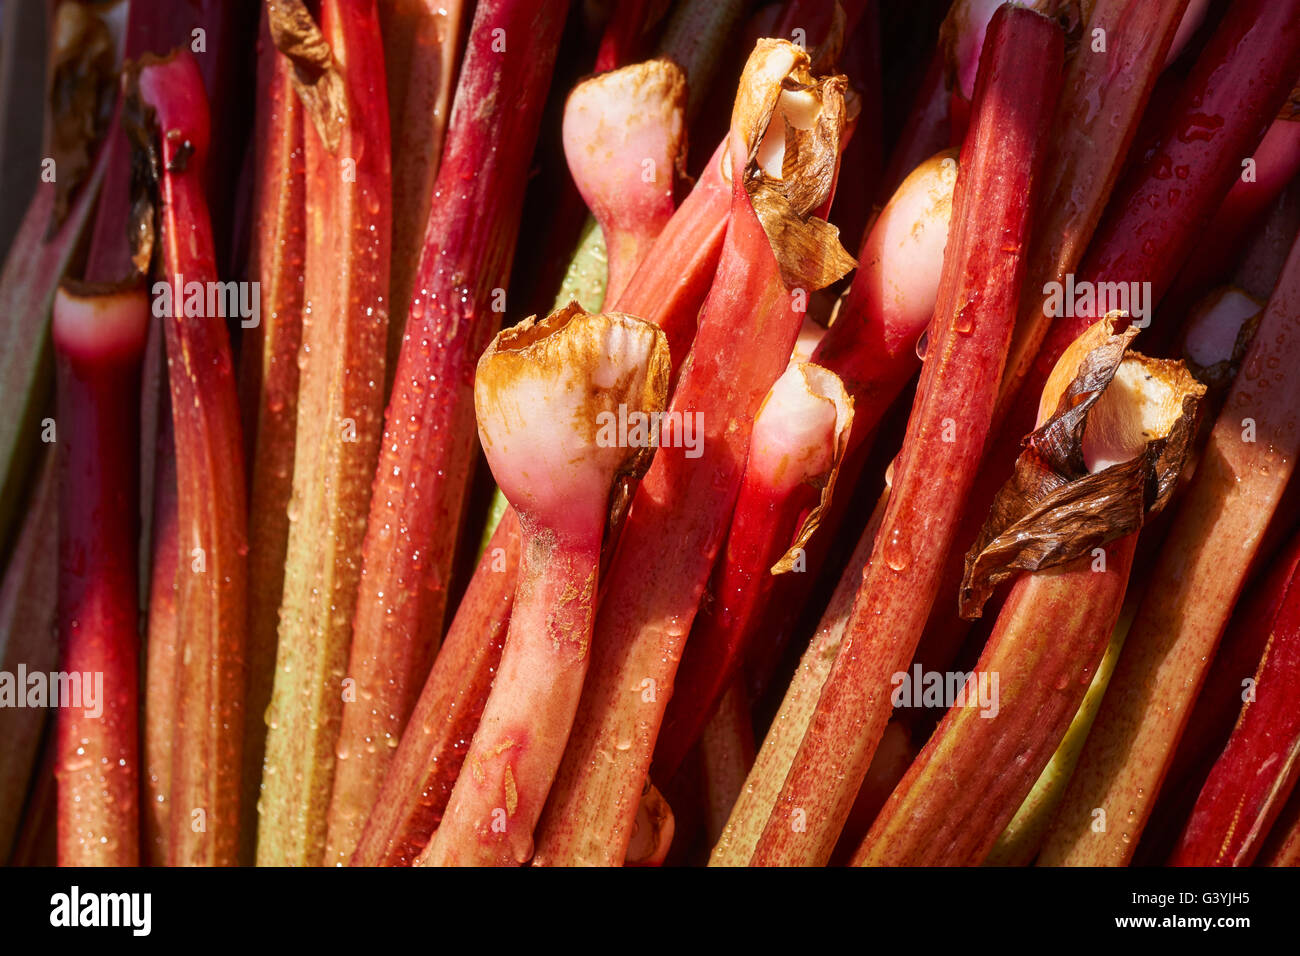 Fresh Rhubarb stalks at the Union Square Greenmarket in Manhattan, New York City, USA Stock Photo